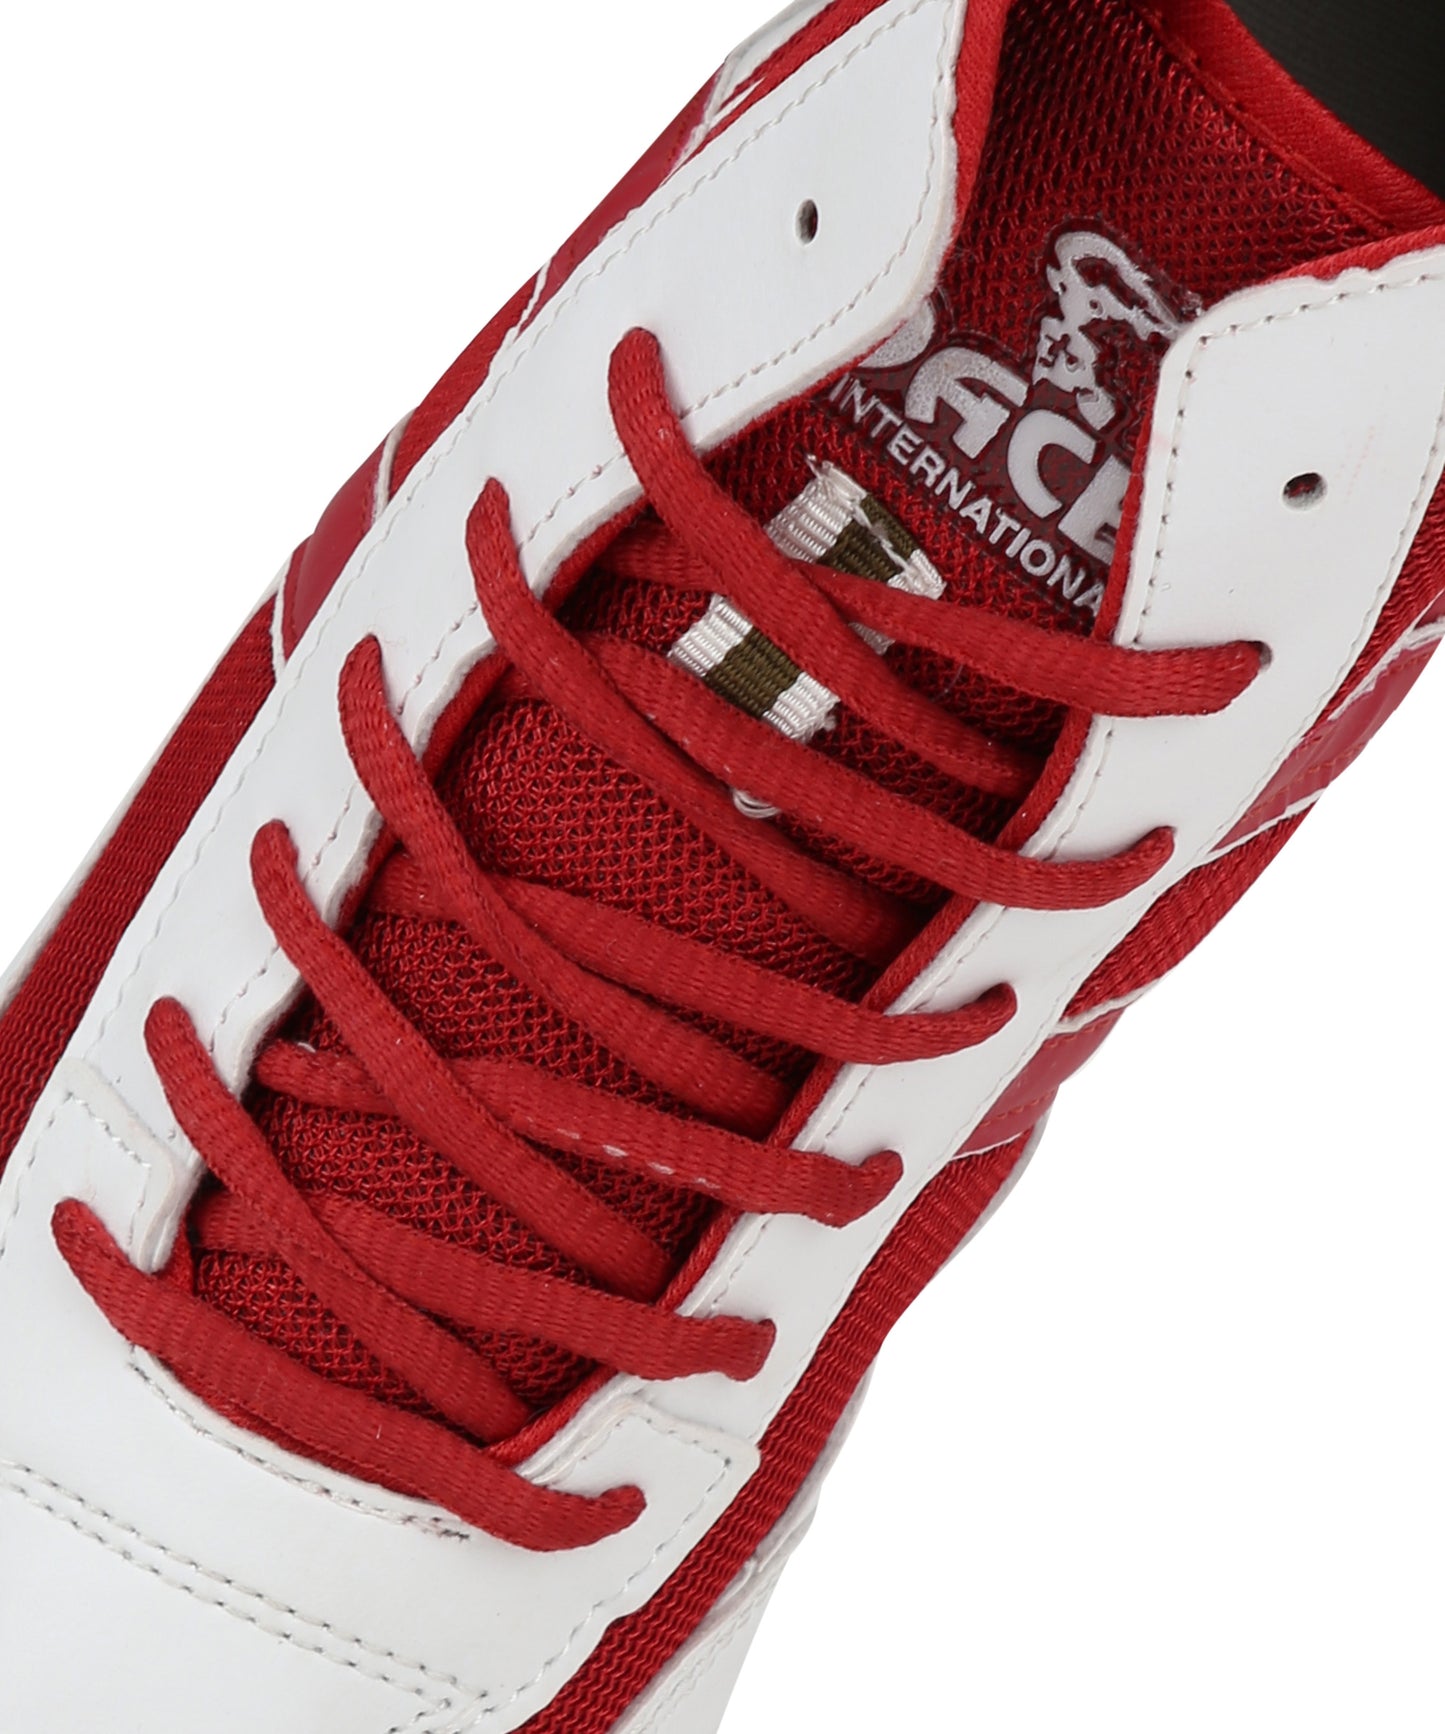 Pace International Kabaddi Shoes (Red/White)